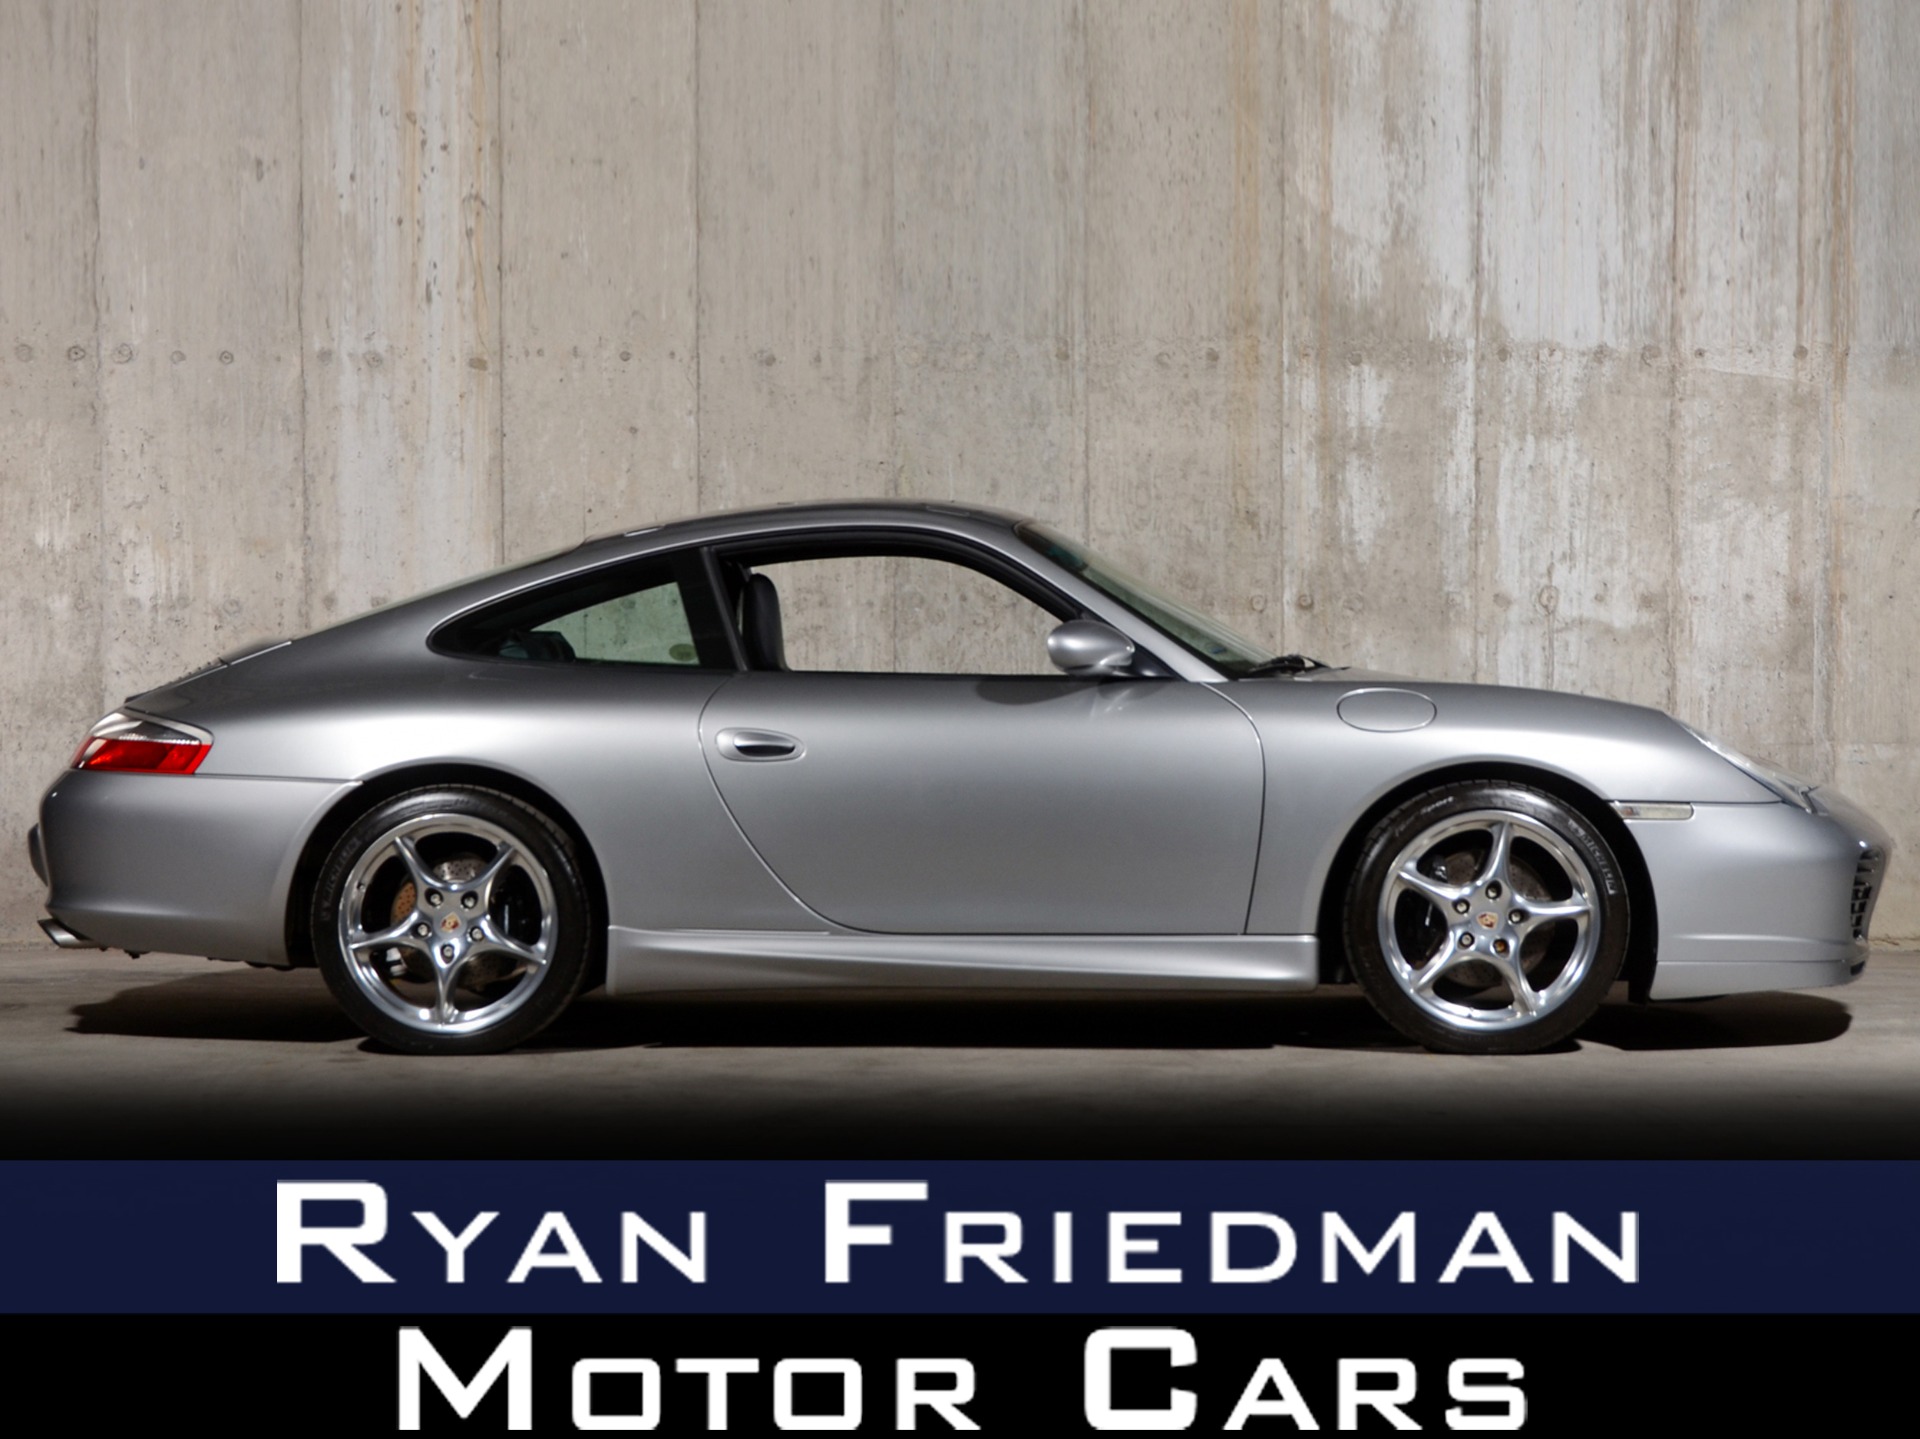 Used 2004 Porsche LLC 40th | Stock For Cars Ryan Edition Friedman Anniversary 911 (Sold) Carrera Motor #1406 Sale